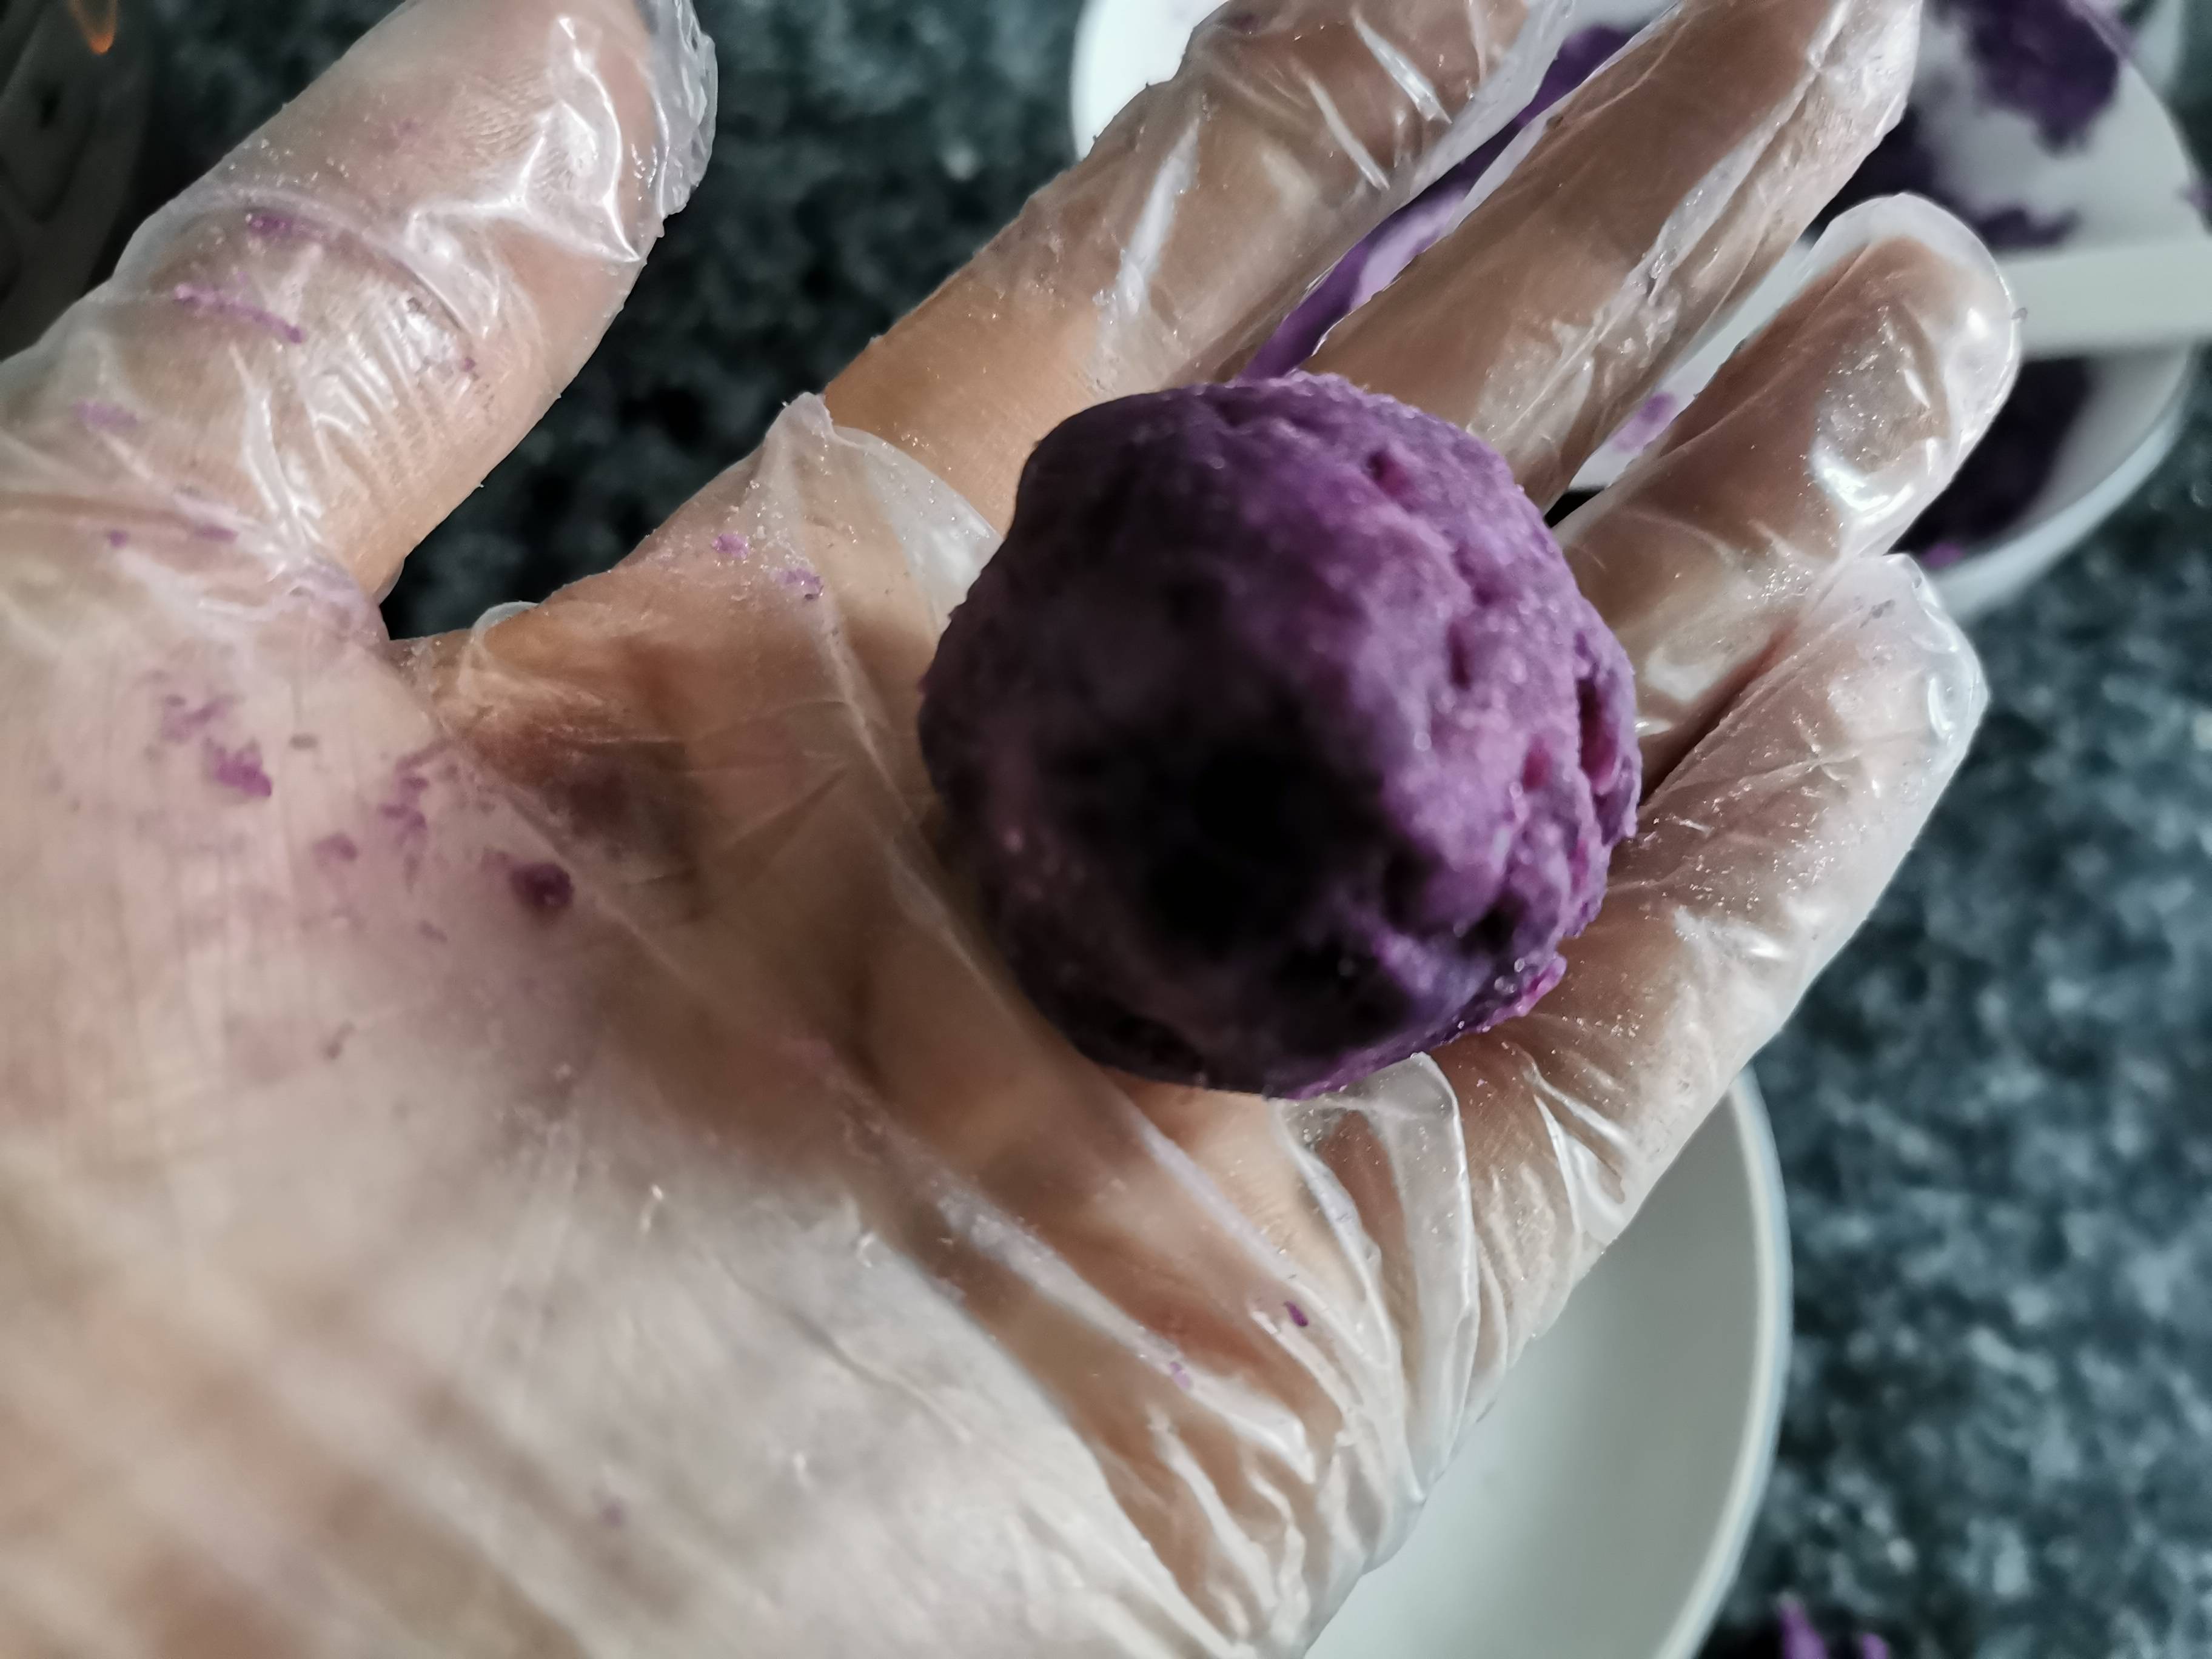 Crystal Yam and Purple Sweet Potato Dumplings recipe